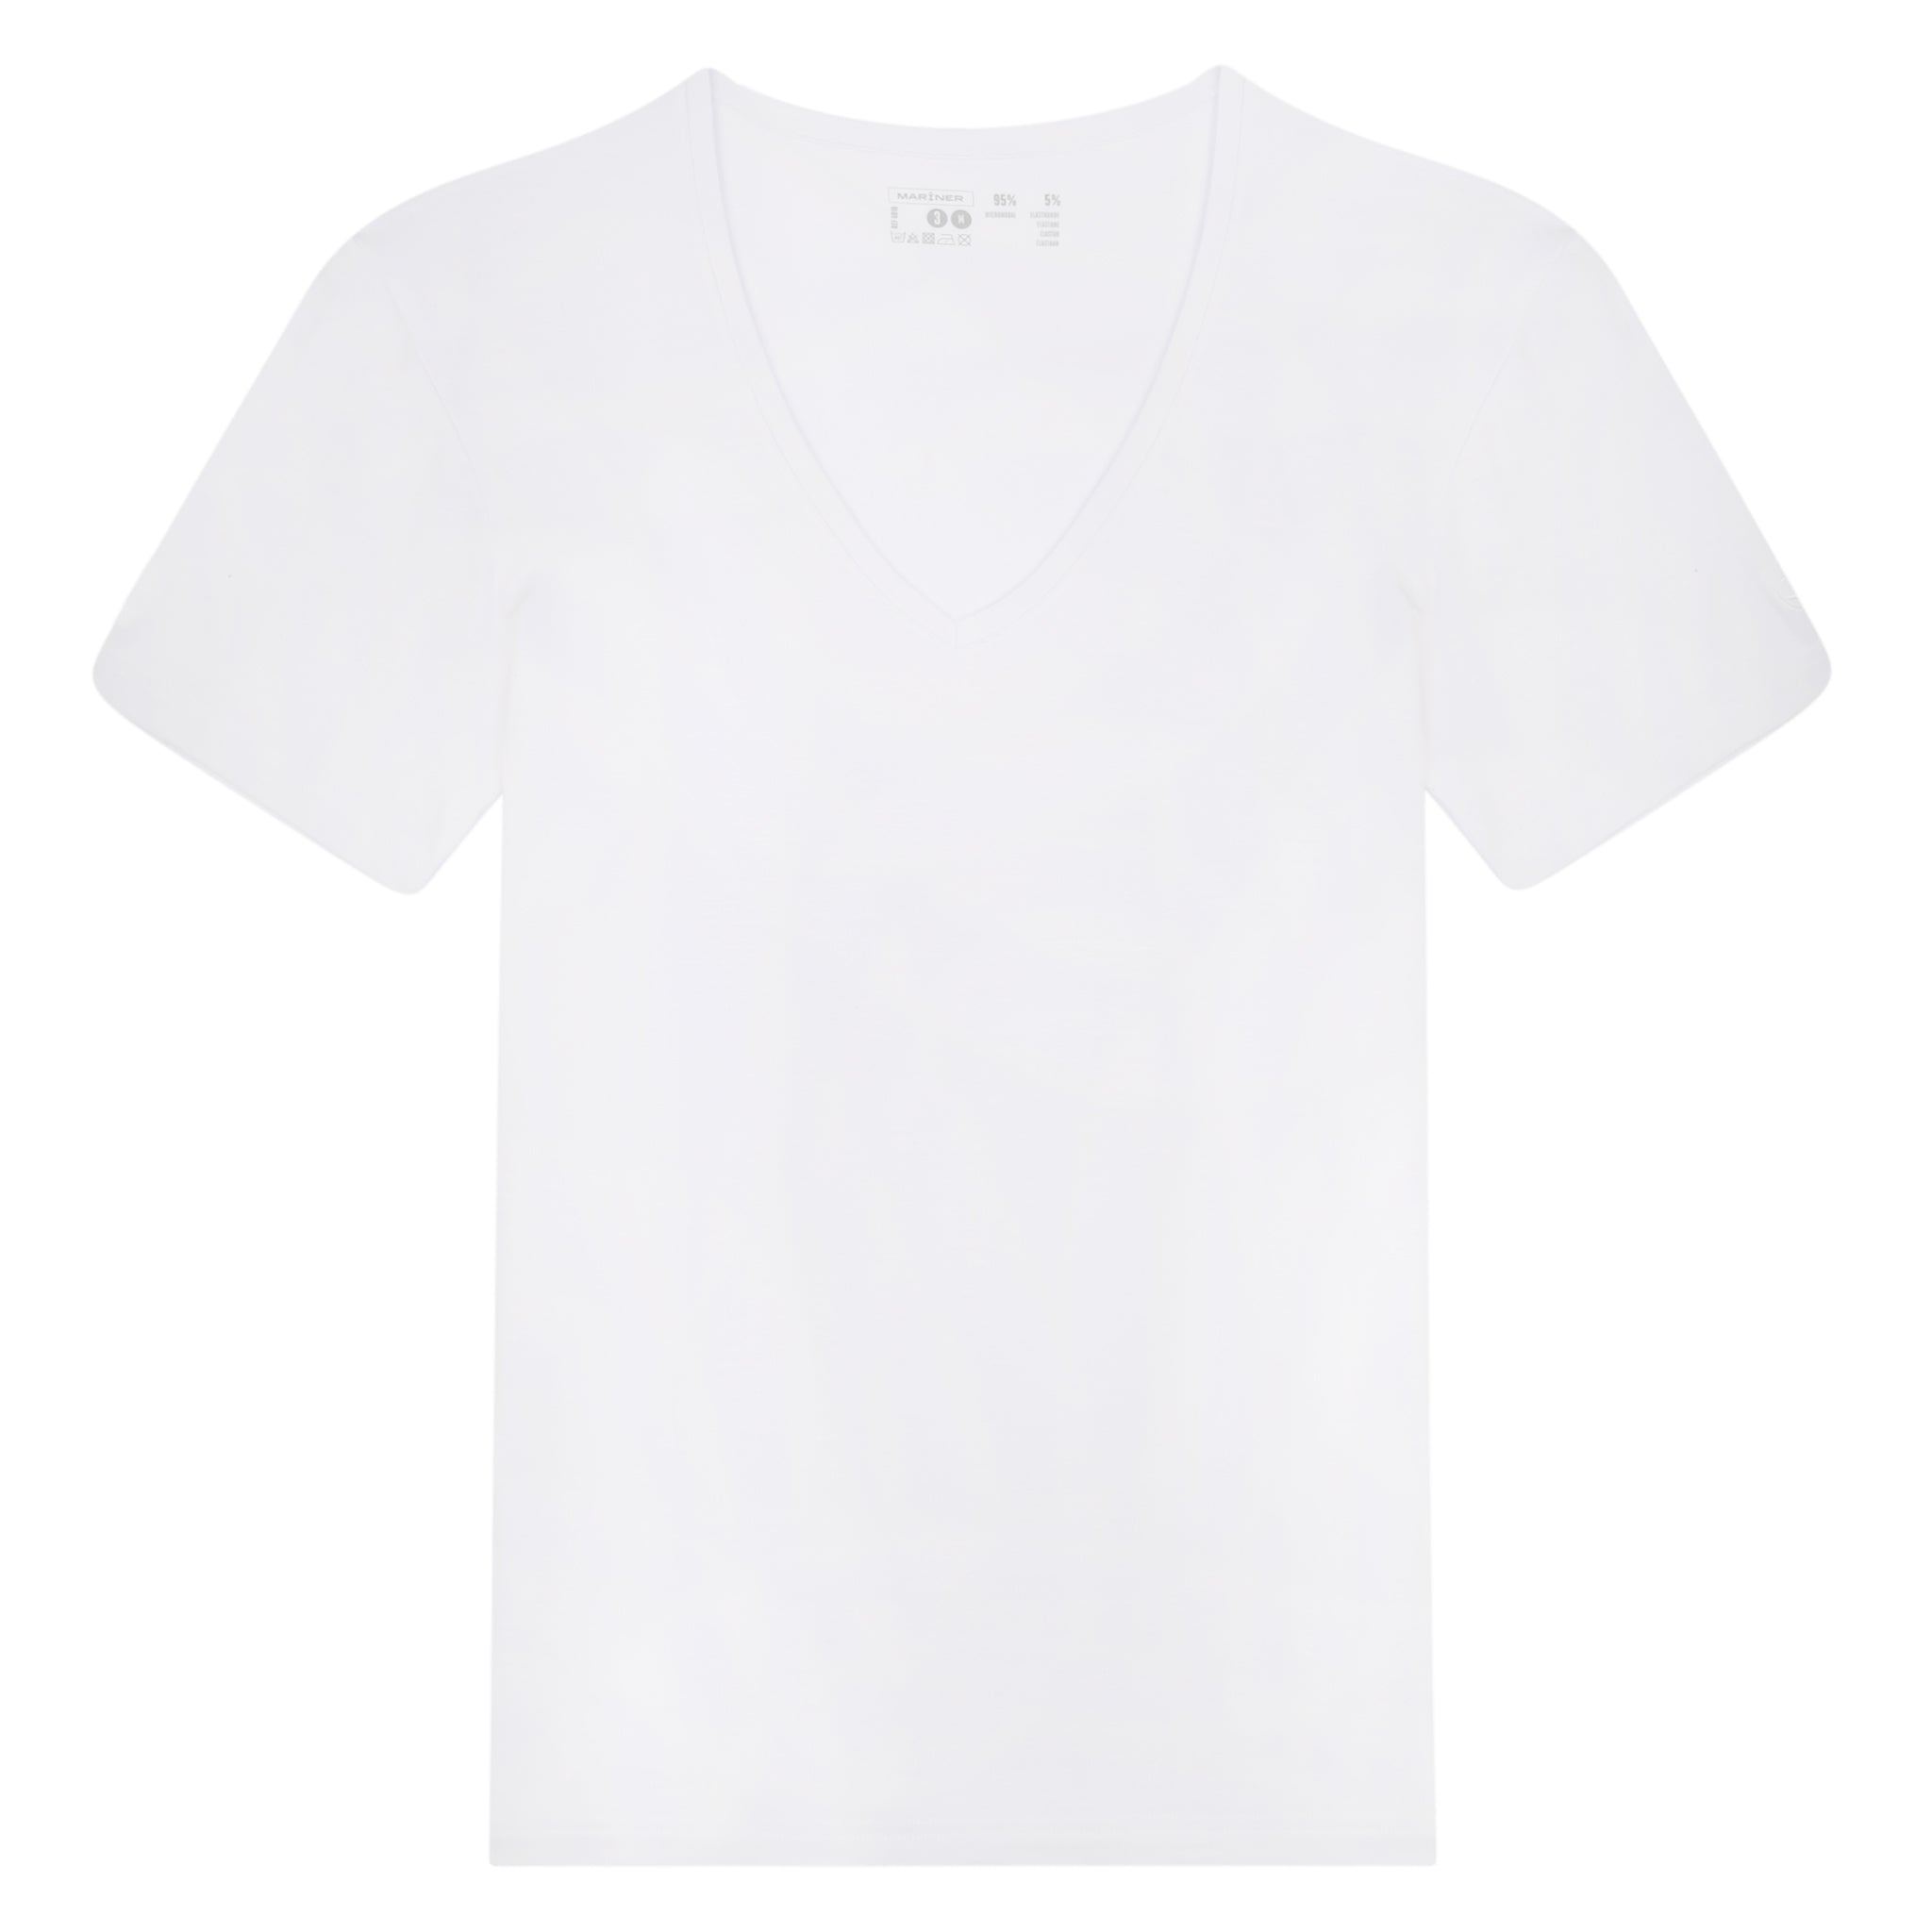 Micromodal Stretch V-neck T-shirt WHITE